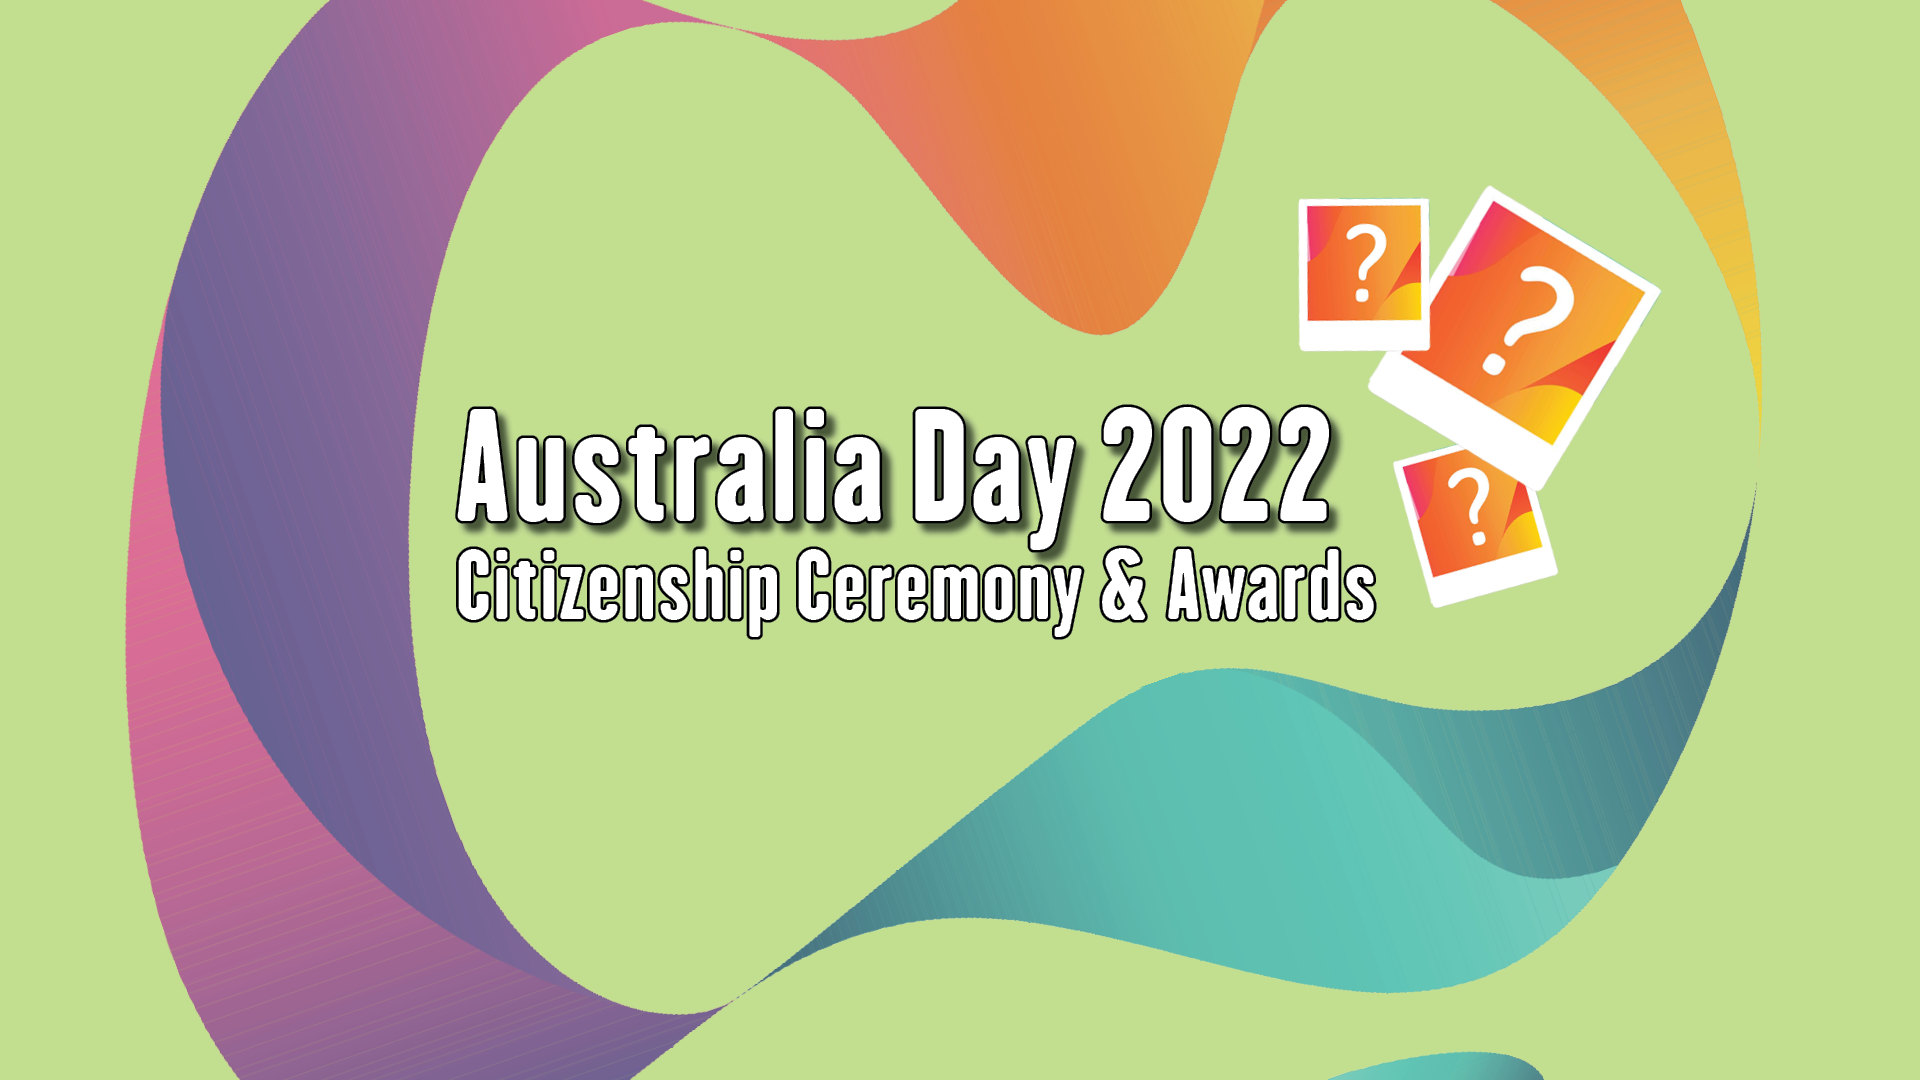 Media Release - Australia Day 2022 - 26 January 2022